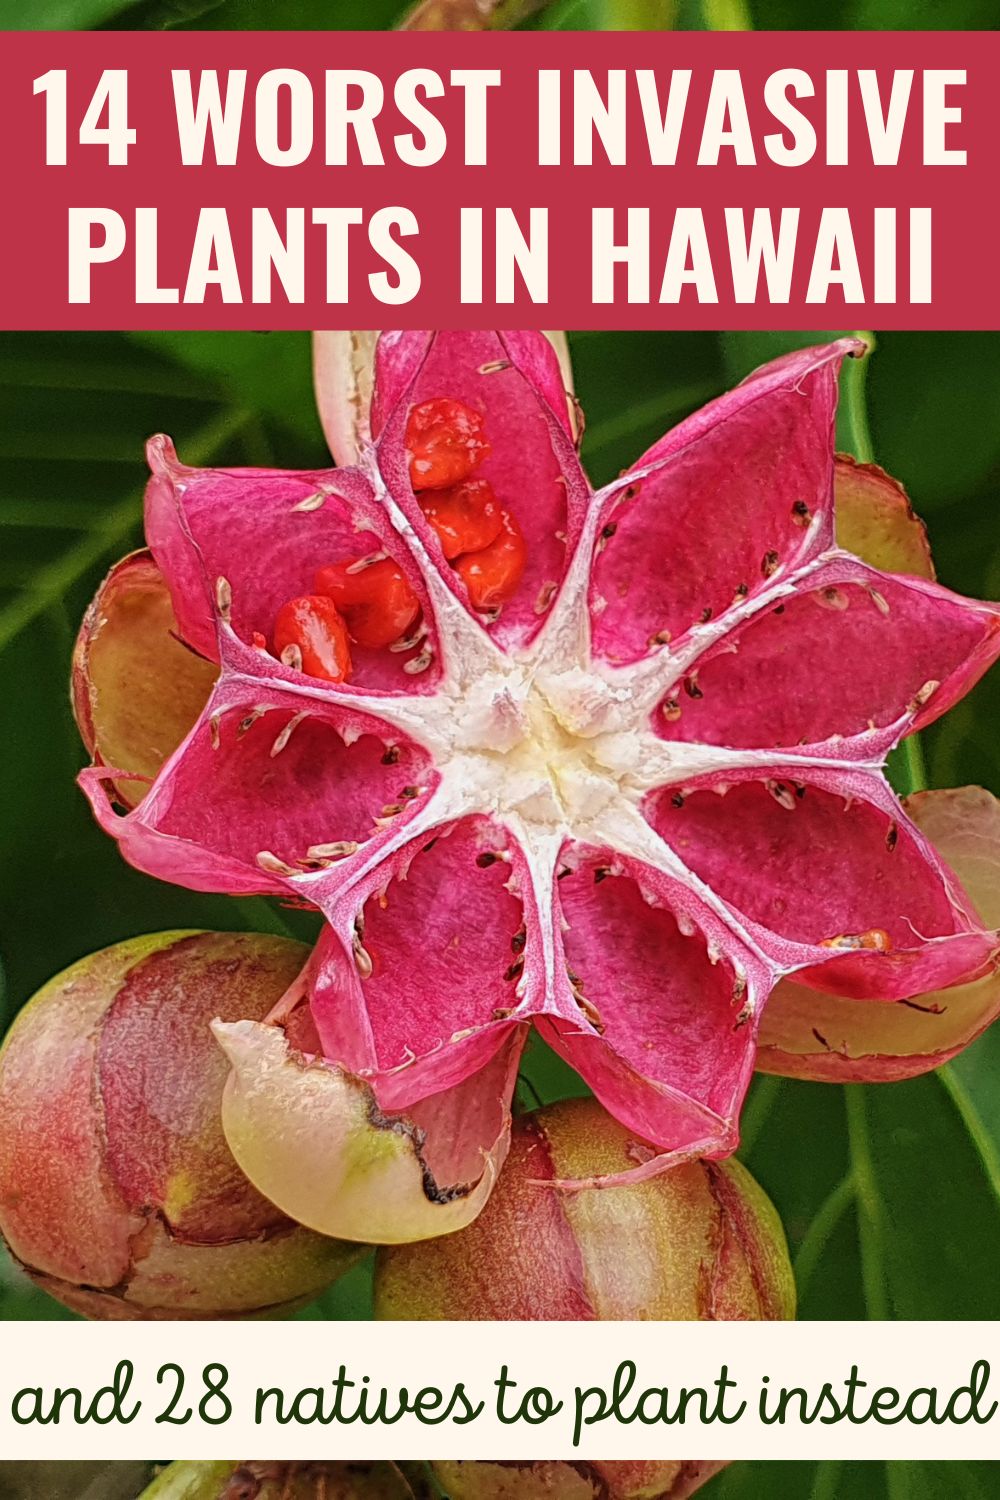 14 worst invasive plants in Hawaii